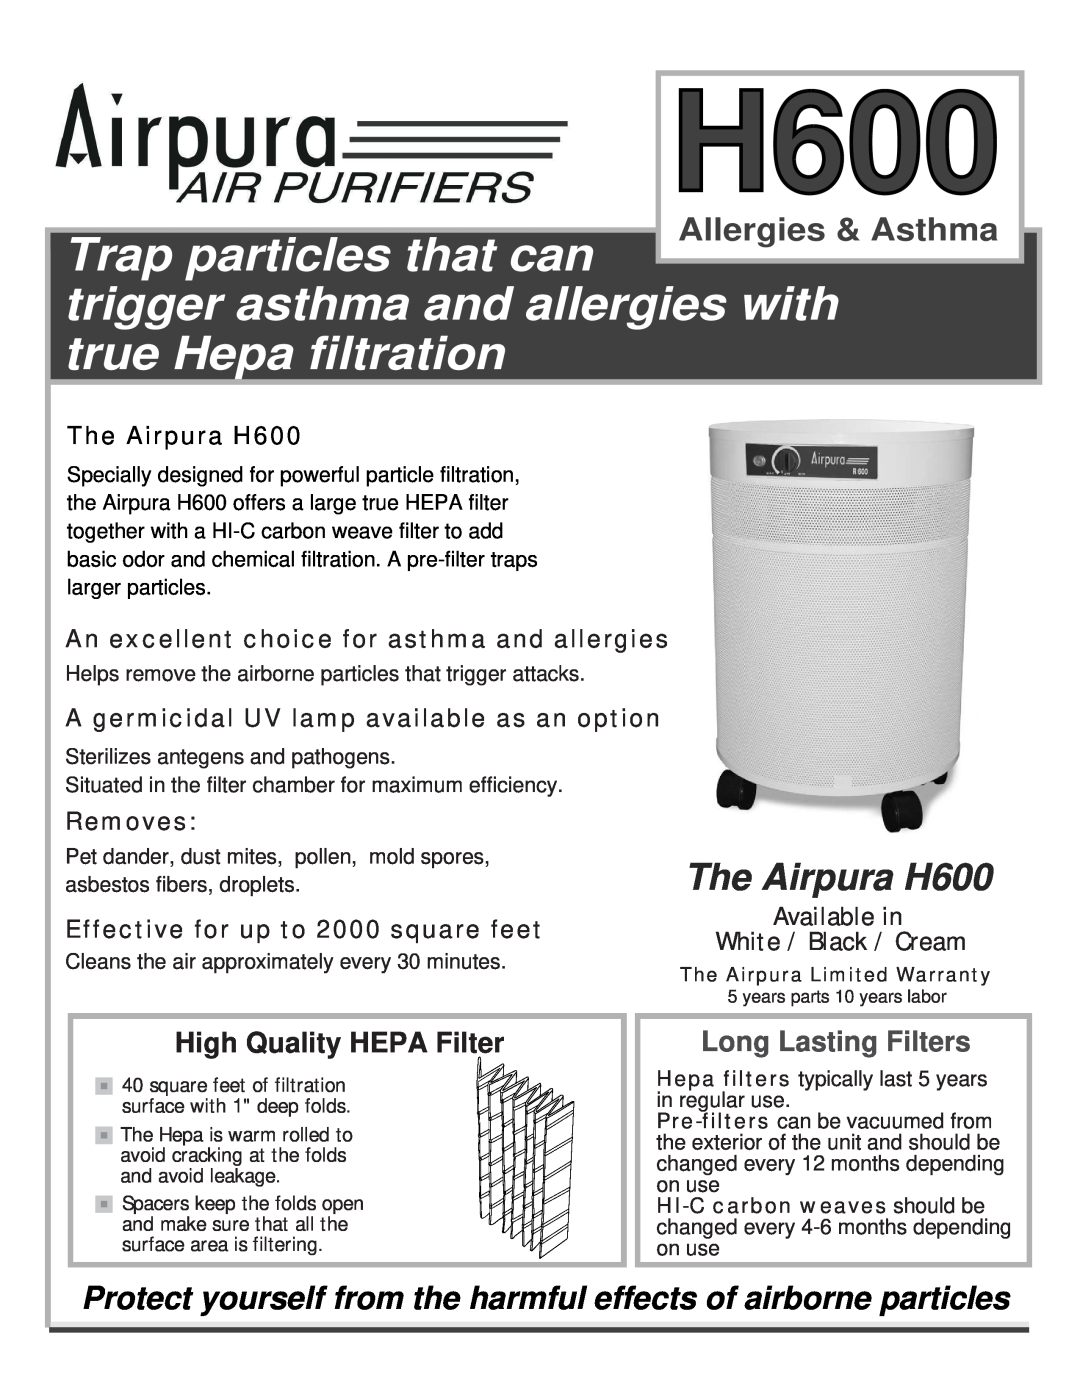 Airpura Industries warranty The Airpura H600, A germicidal UV lamp available as an option, Removes 